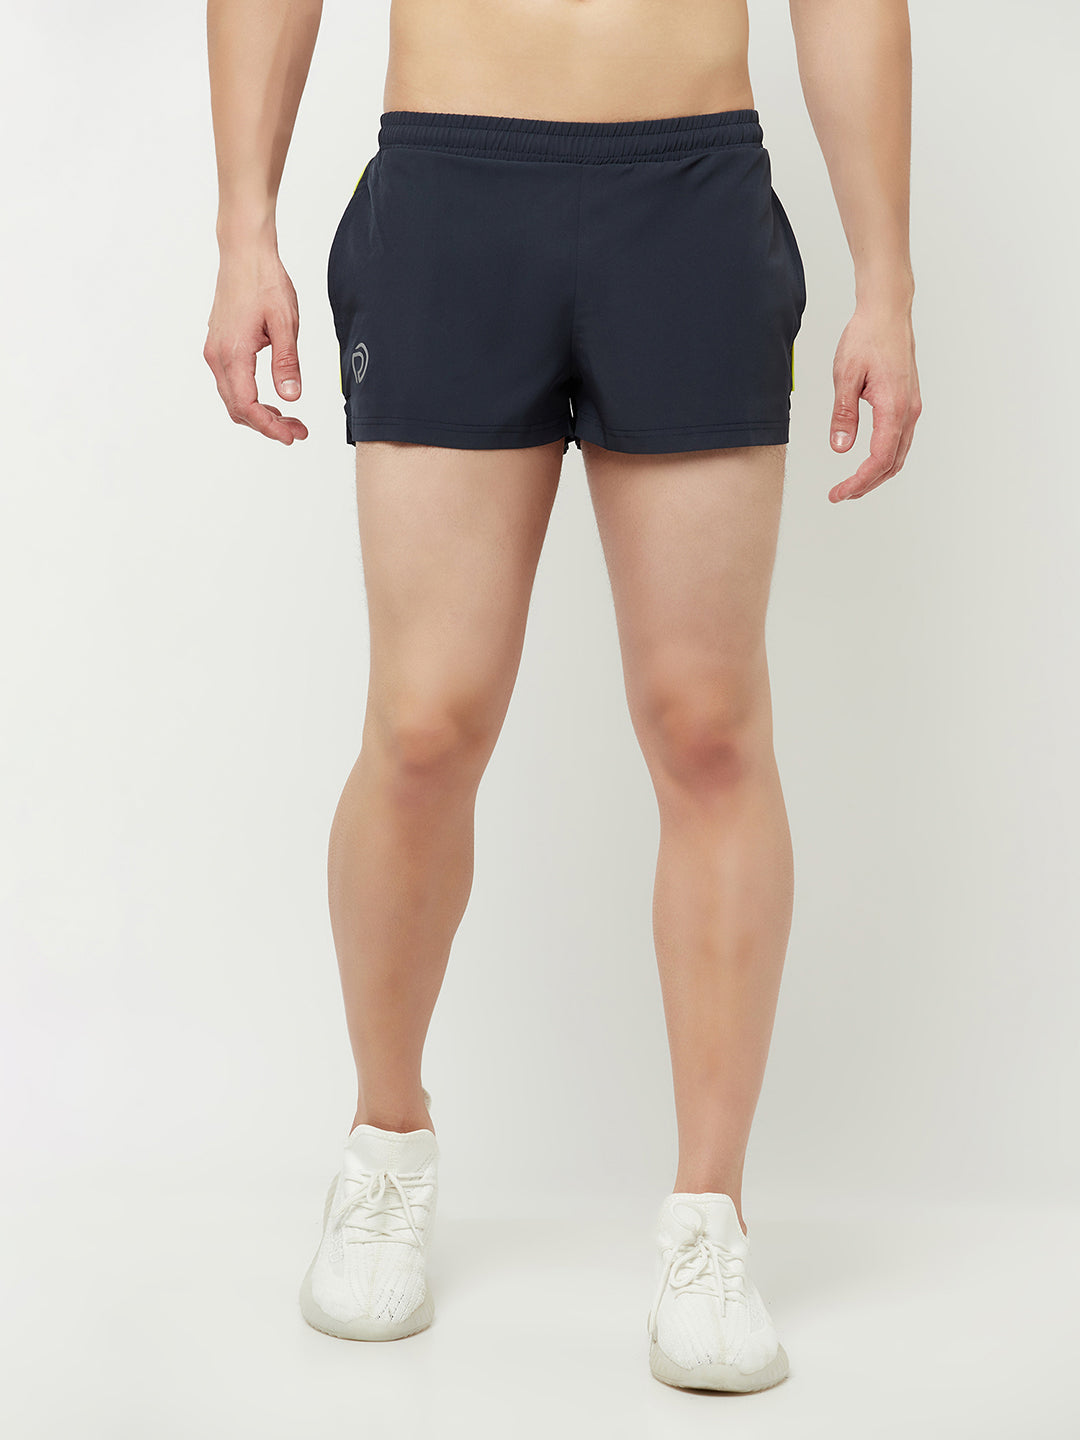 Pro 2 Shorts with Zipper Back Pocket